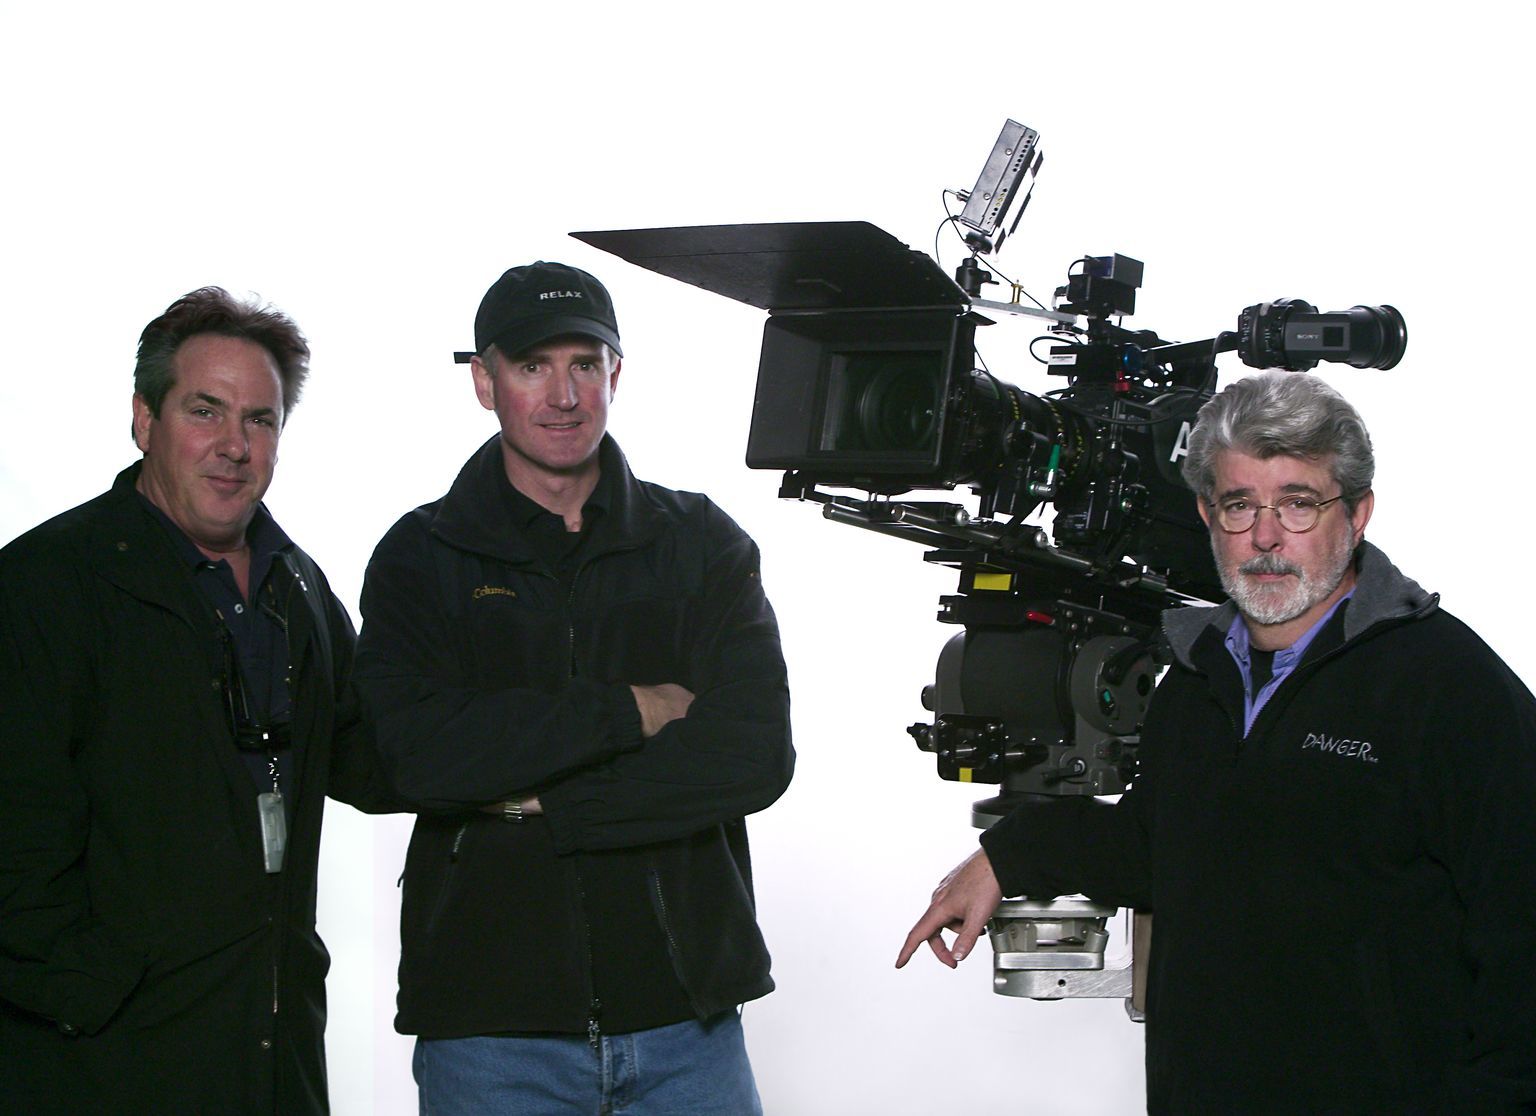 George Lucas and Rick McCallum in Zvaigzdziu karai. Situ kerstas (2005)